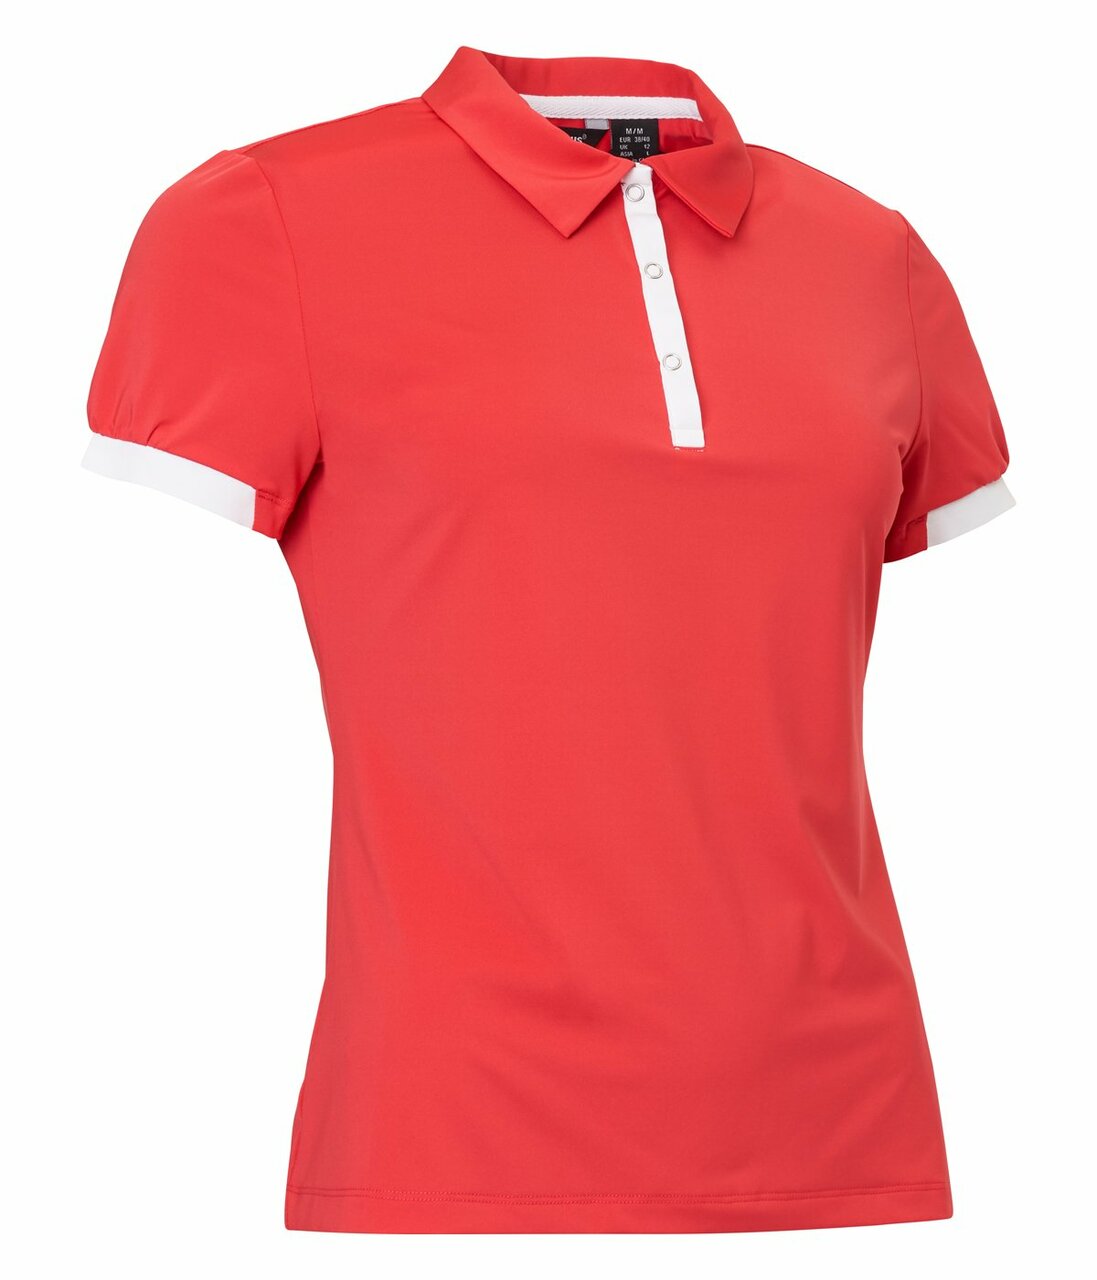 Abacus Sports Wear: Women’s High-Performance Golf Polo – Cherry (Poppy Red/Burnt Orange, Size: Medium) SALE